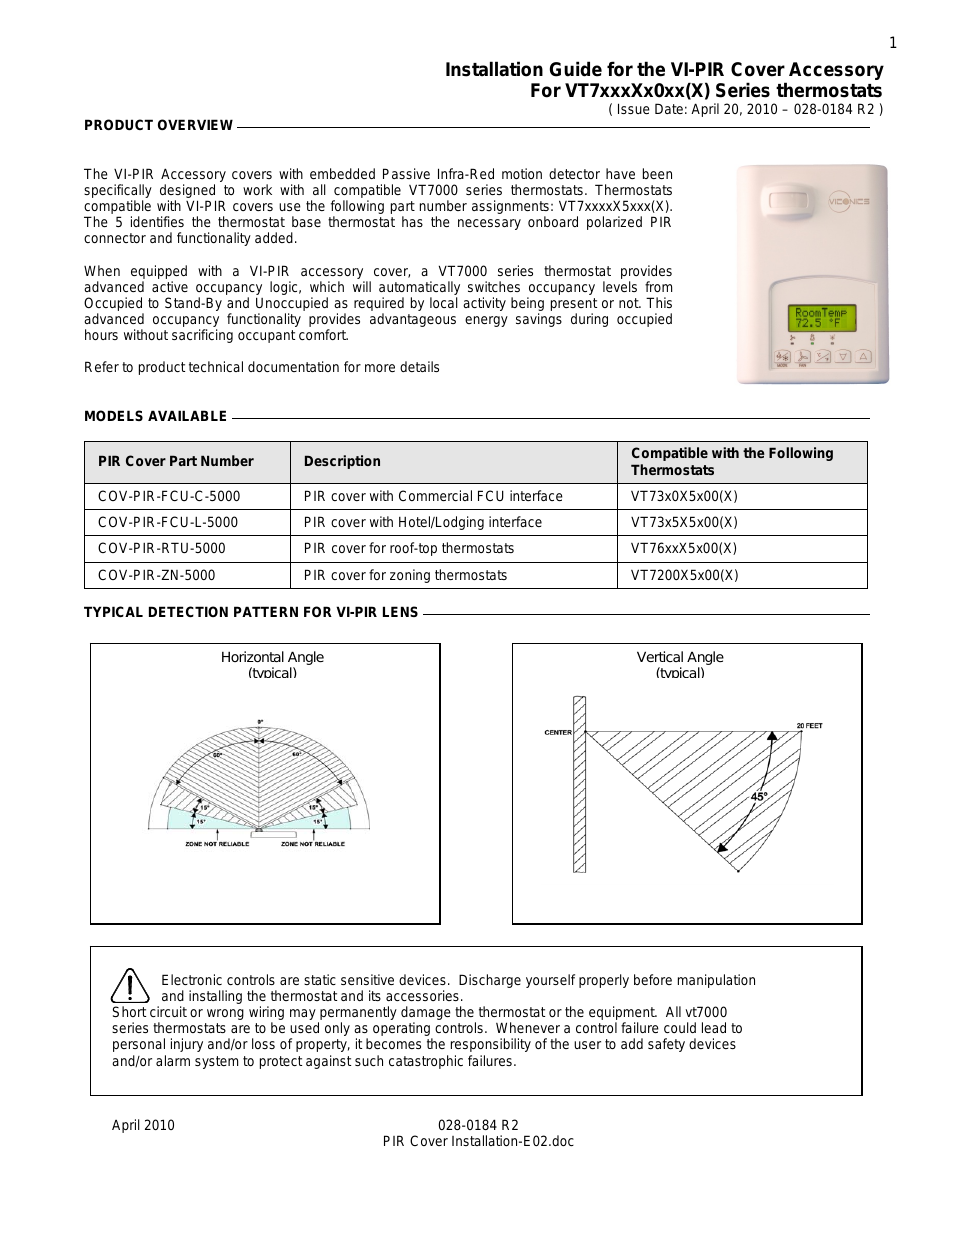 VT7000 Series PIR cover Installation Guide